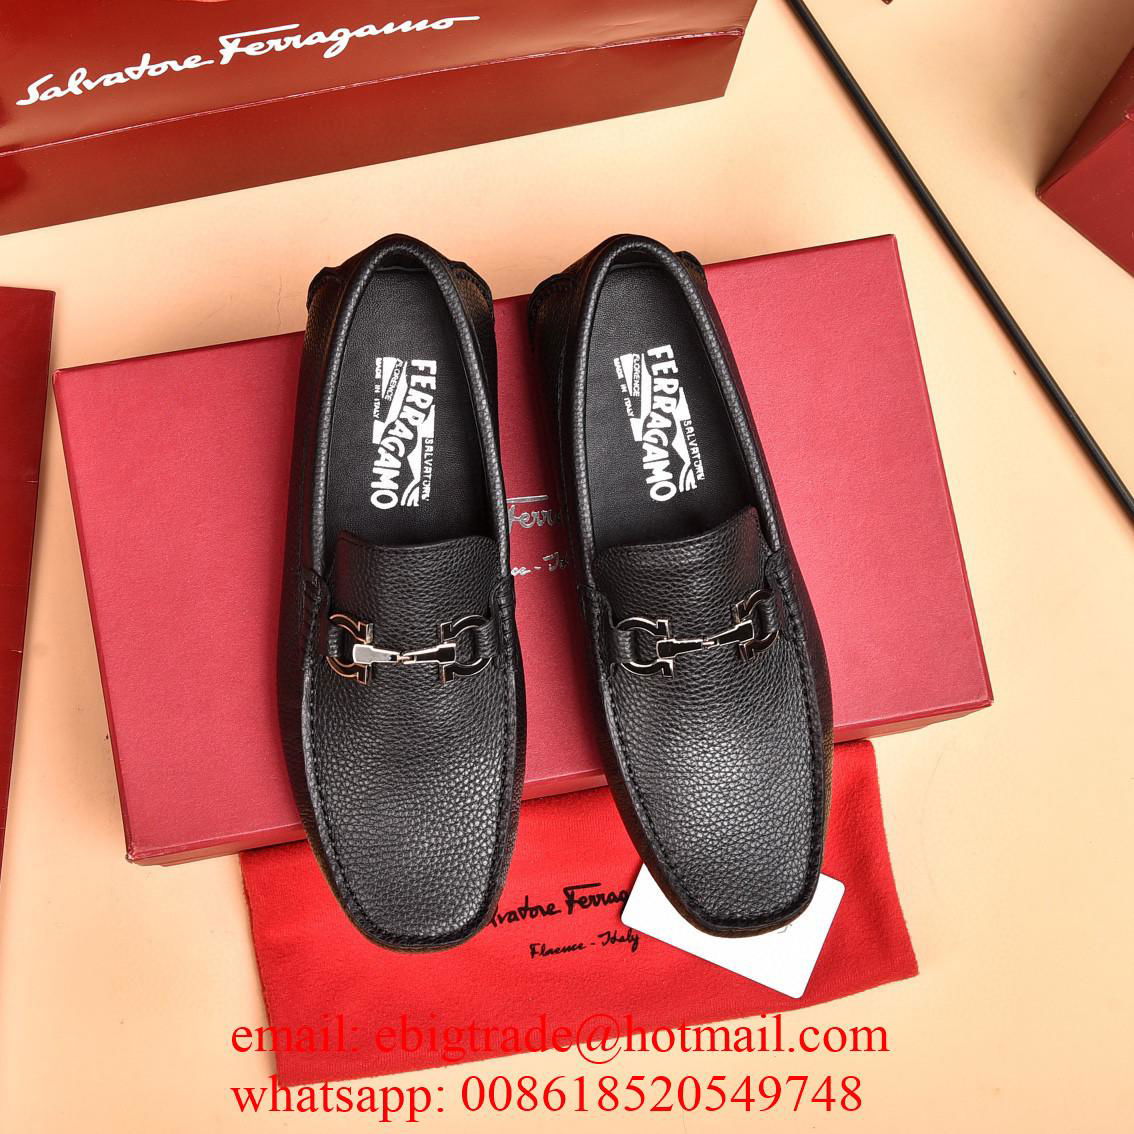 Wholesaler Salvatore           men Shoes Cheap           Loafers leather Shoes